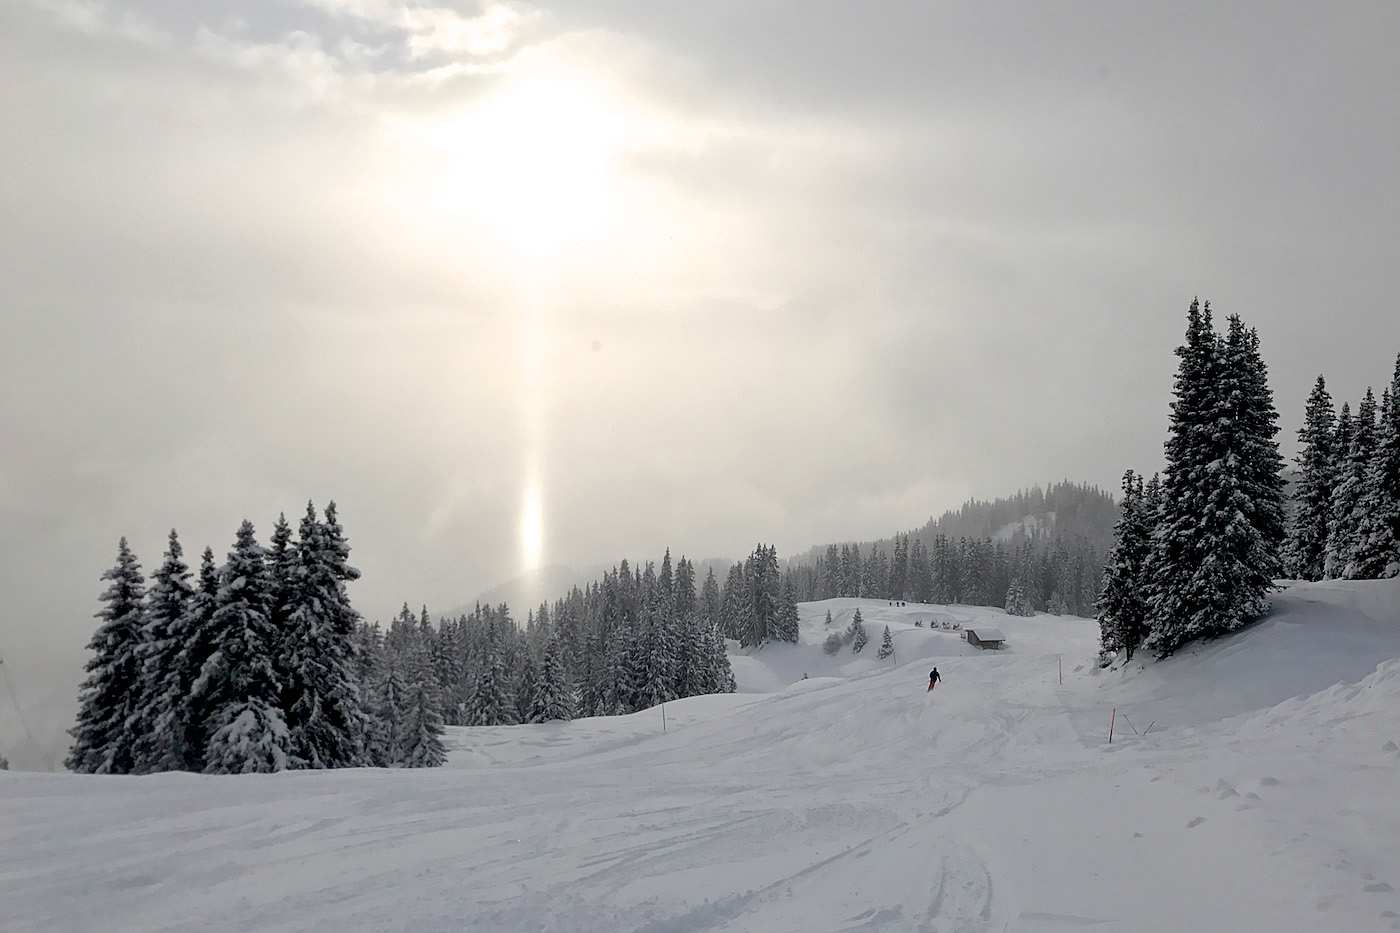 Skiferien in der Schweiz, Skigebiet LAAX, LAAXisniceyo, Graubünden, skiing in LAAX, culinary trail LAAX/Flims, ski weekend LAAX, winter holiday